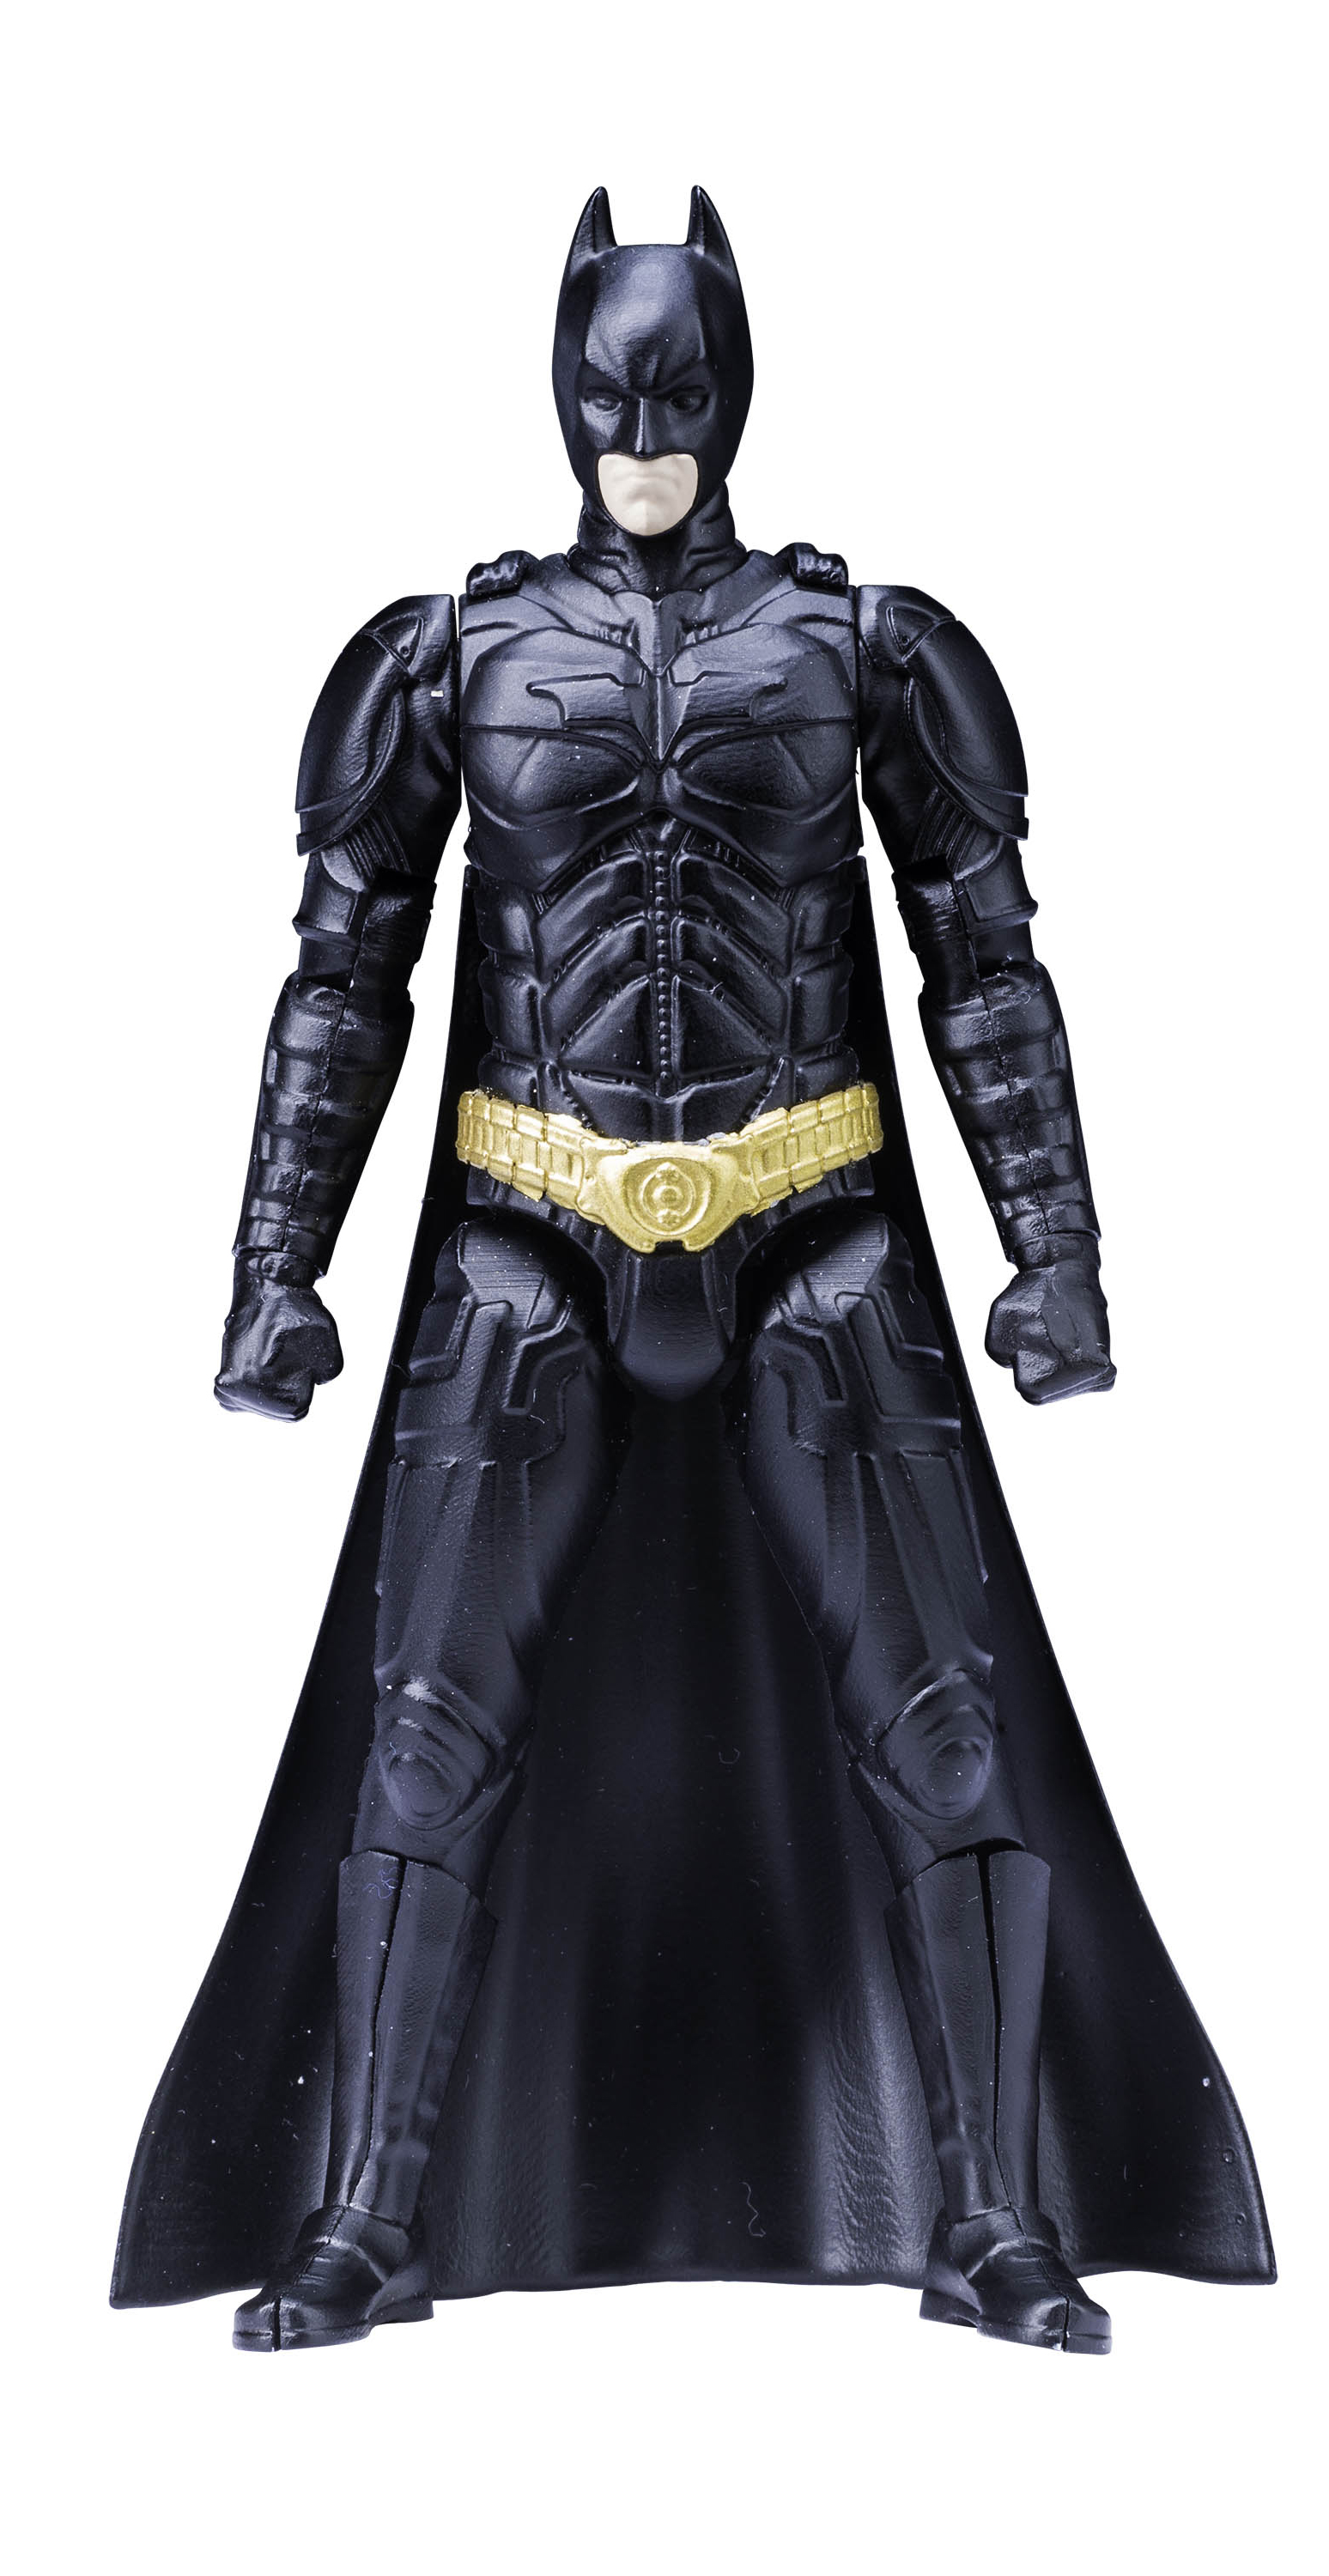 Bandai Sprukits Batman. Batman model Kit Bandai. Конструктор Bandai DC Comics новый 52 Бэтмен 1. Batman Dark Knight Rises DC Multiverse. Модель бэтмена